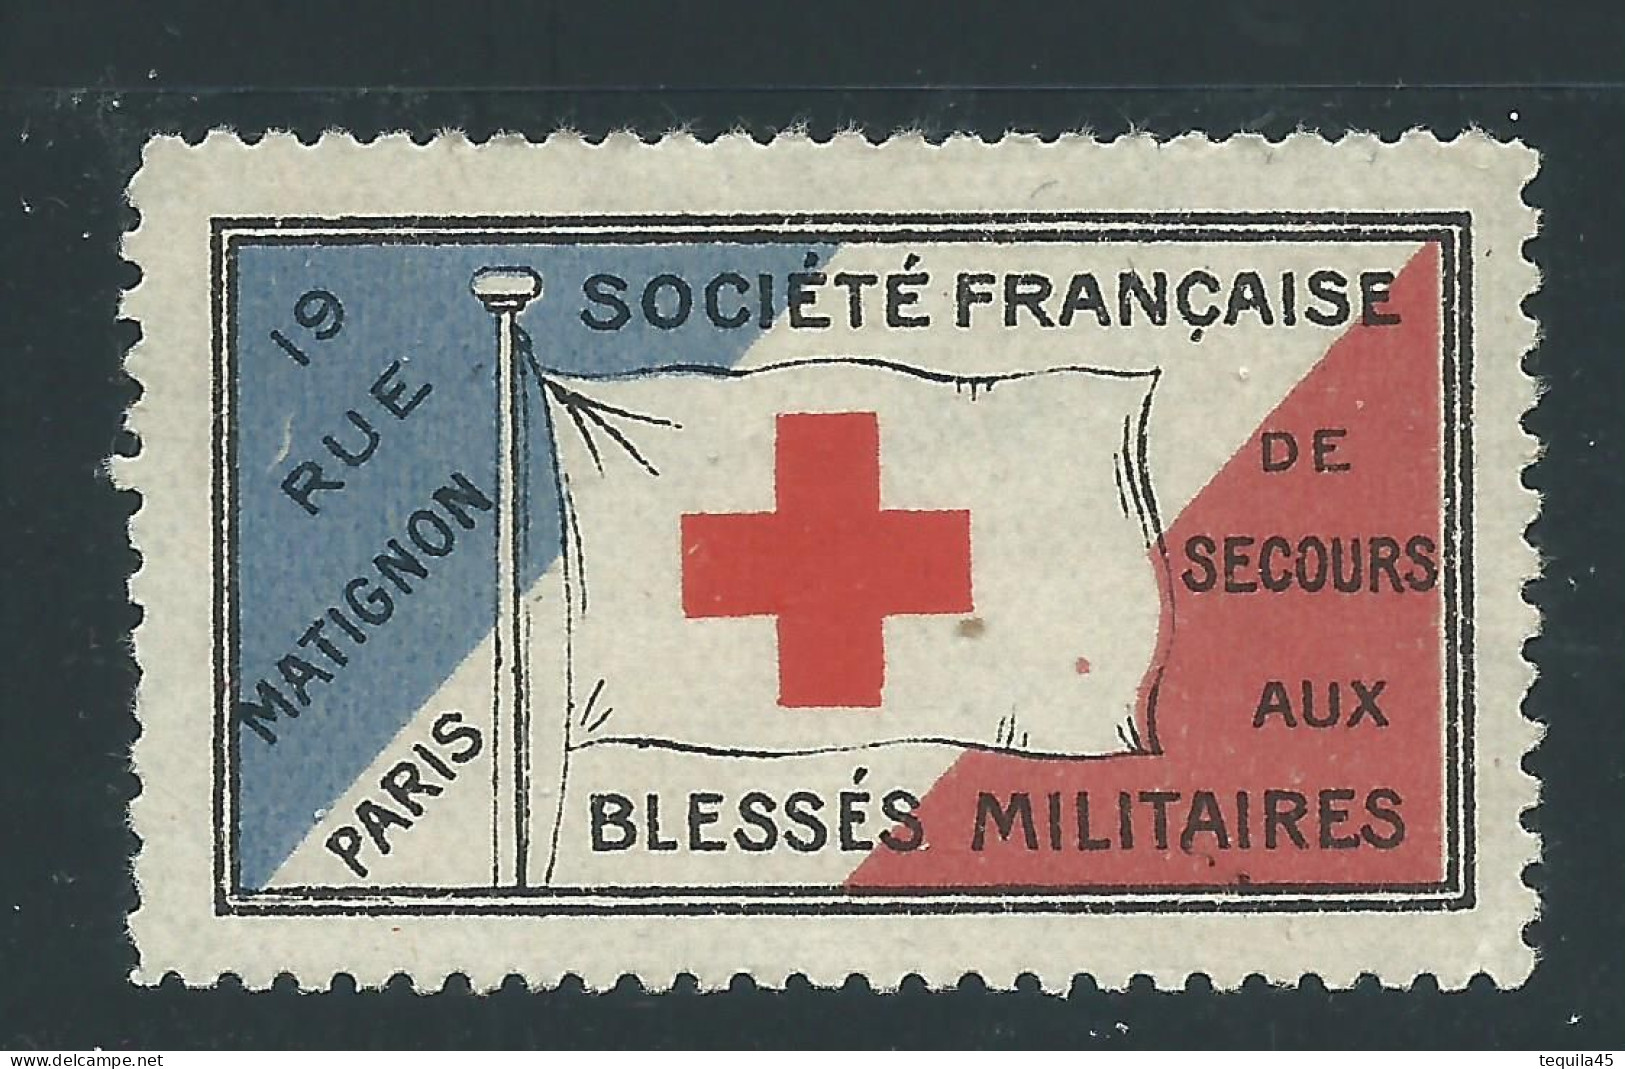 VIGNETTE DELANDRE - Secours Blessés Militaires - France - WWI WW1 Cinderella Poster Stamp Grande Guerre 1914 1918 - Rode Kruis